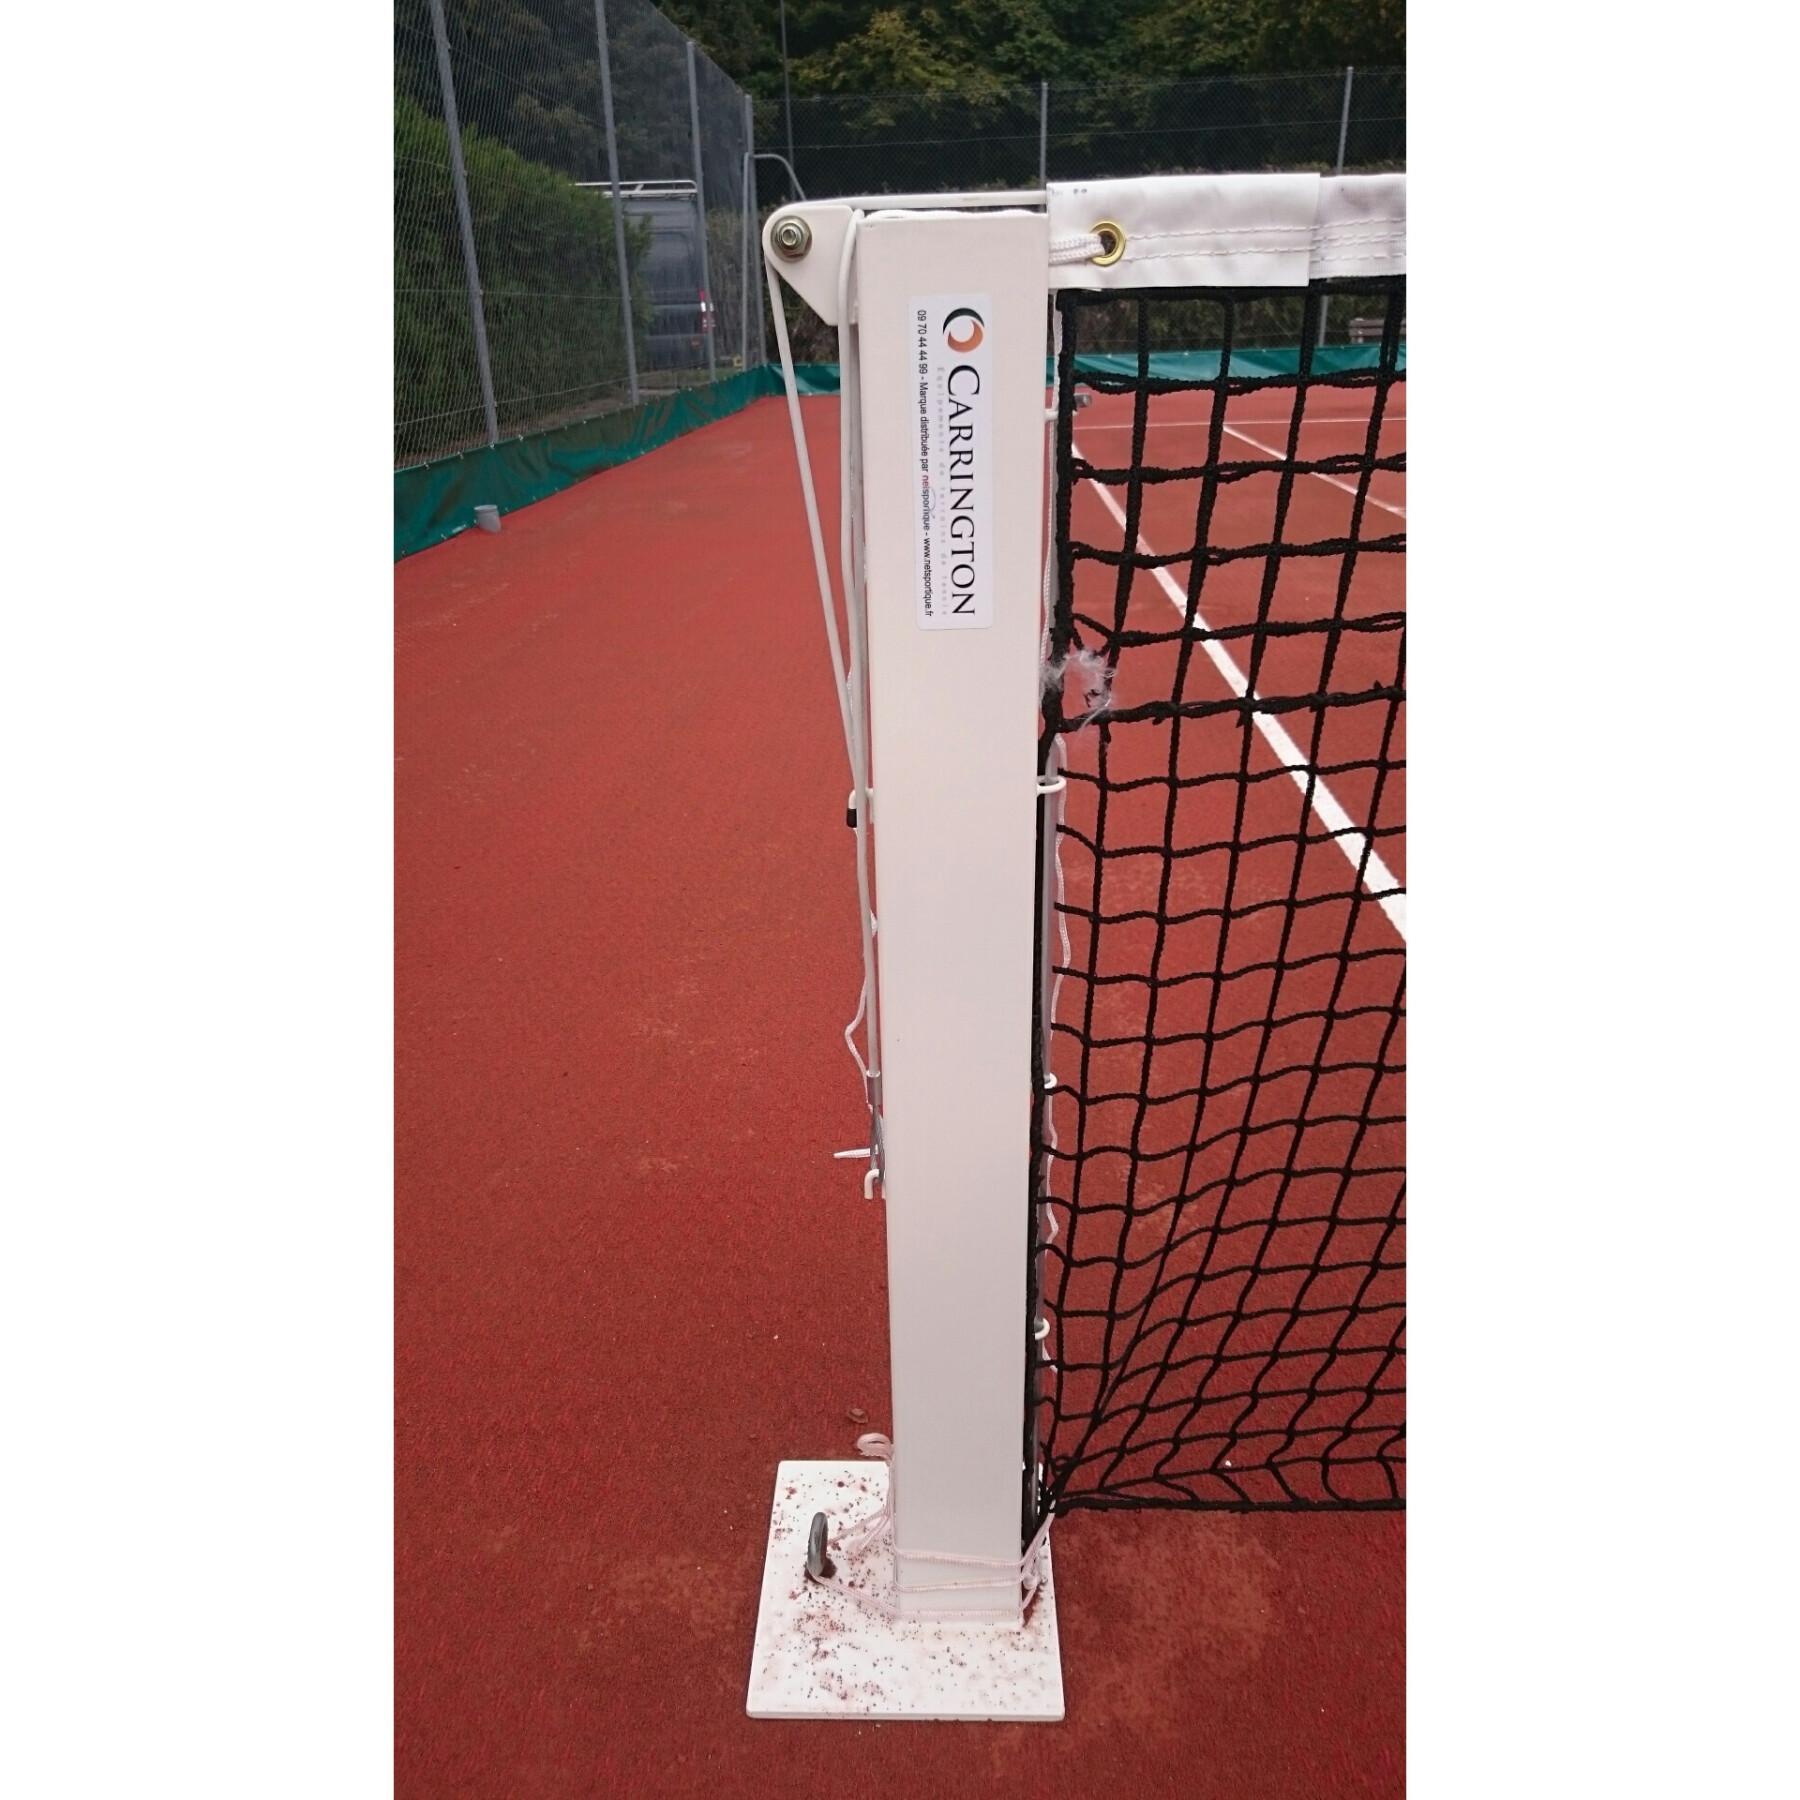 Tennis posts on base plates Carrington